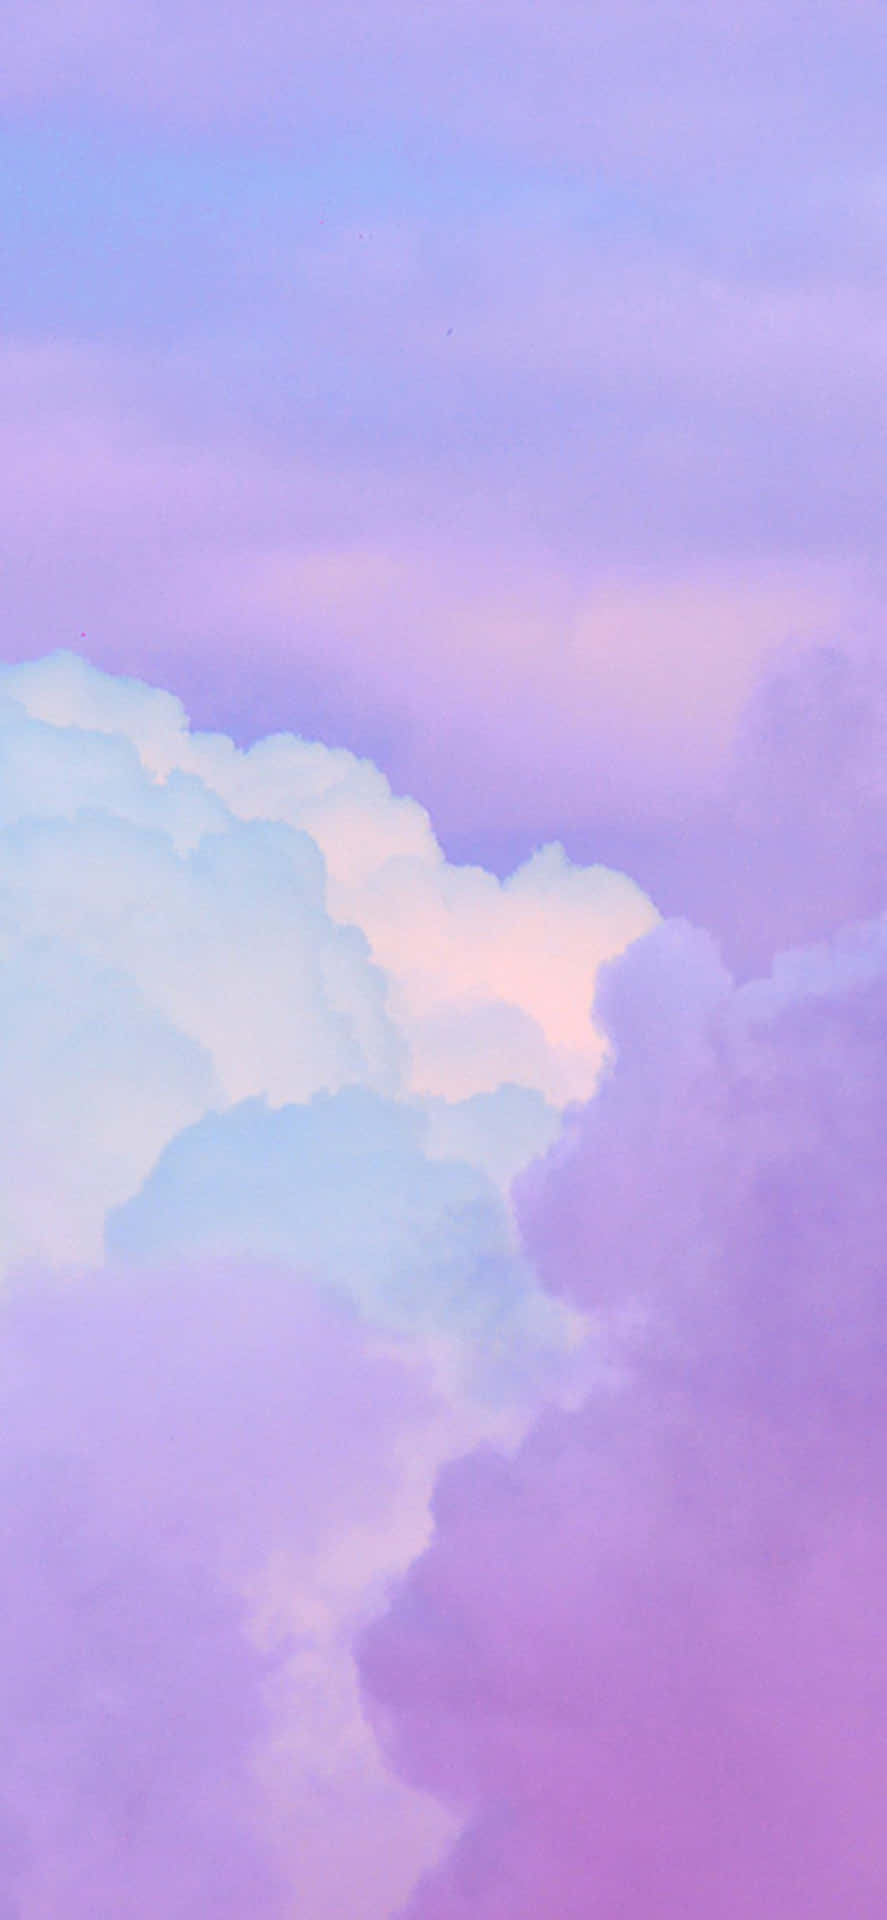 Dreamy Purple Clouds on the Horizon